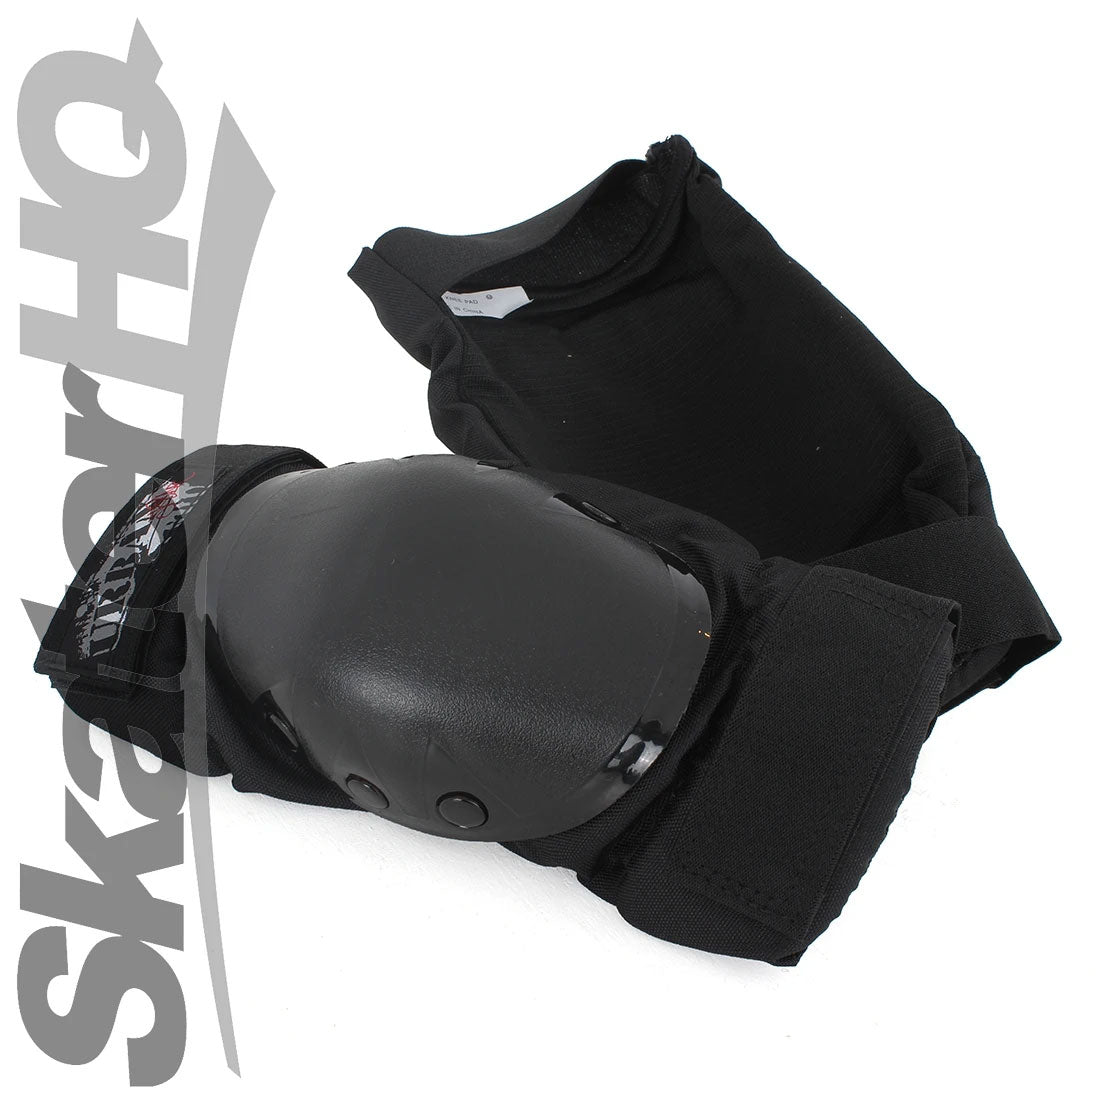 Urban Skater Knee/Elbow Black - Large Protective Gear